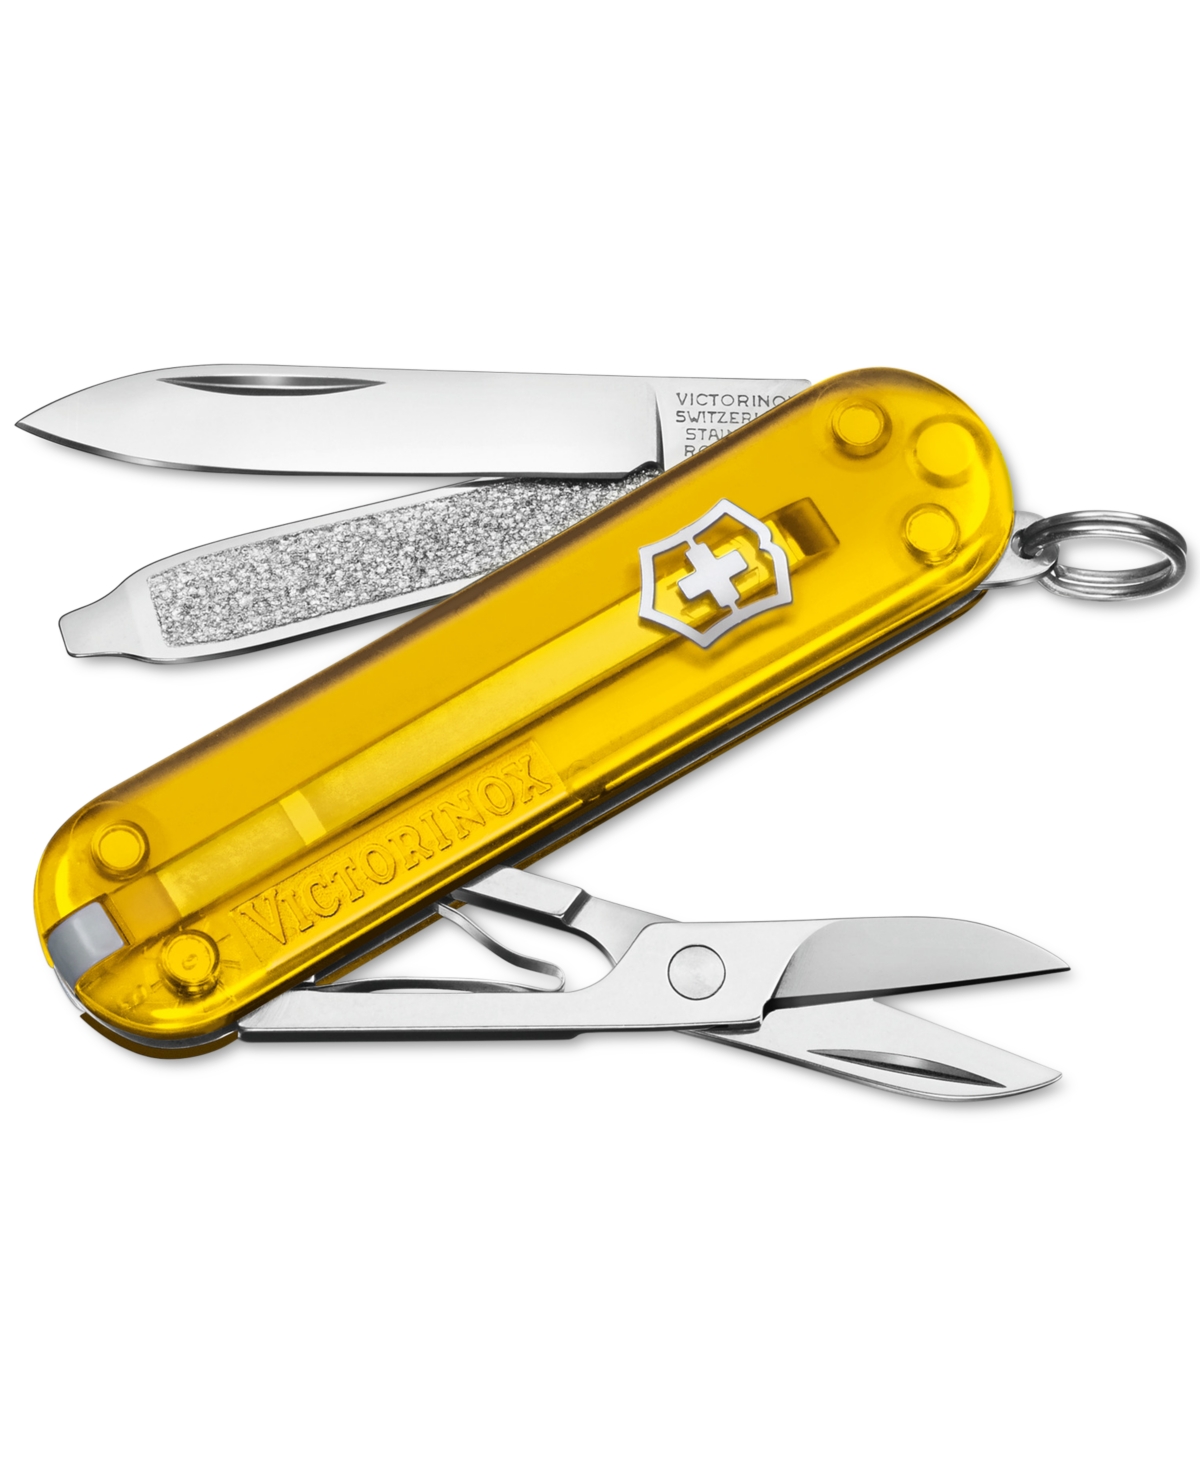 Victorinox Swiss Army Classic Sd Pocketknife, Tuscan Sun In Yellow